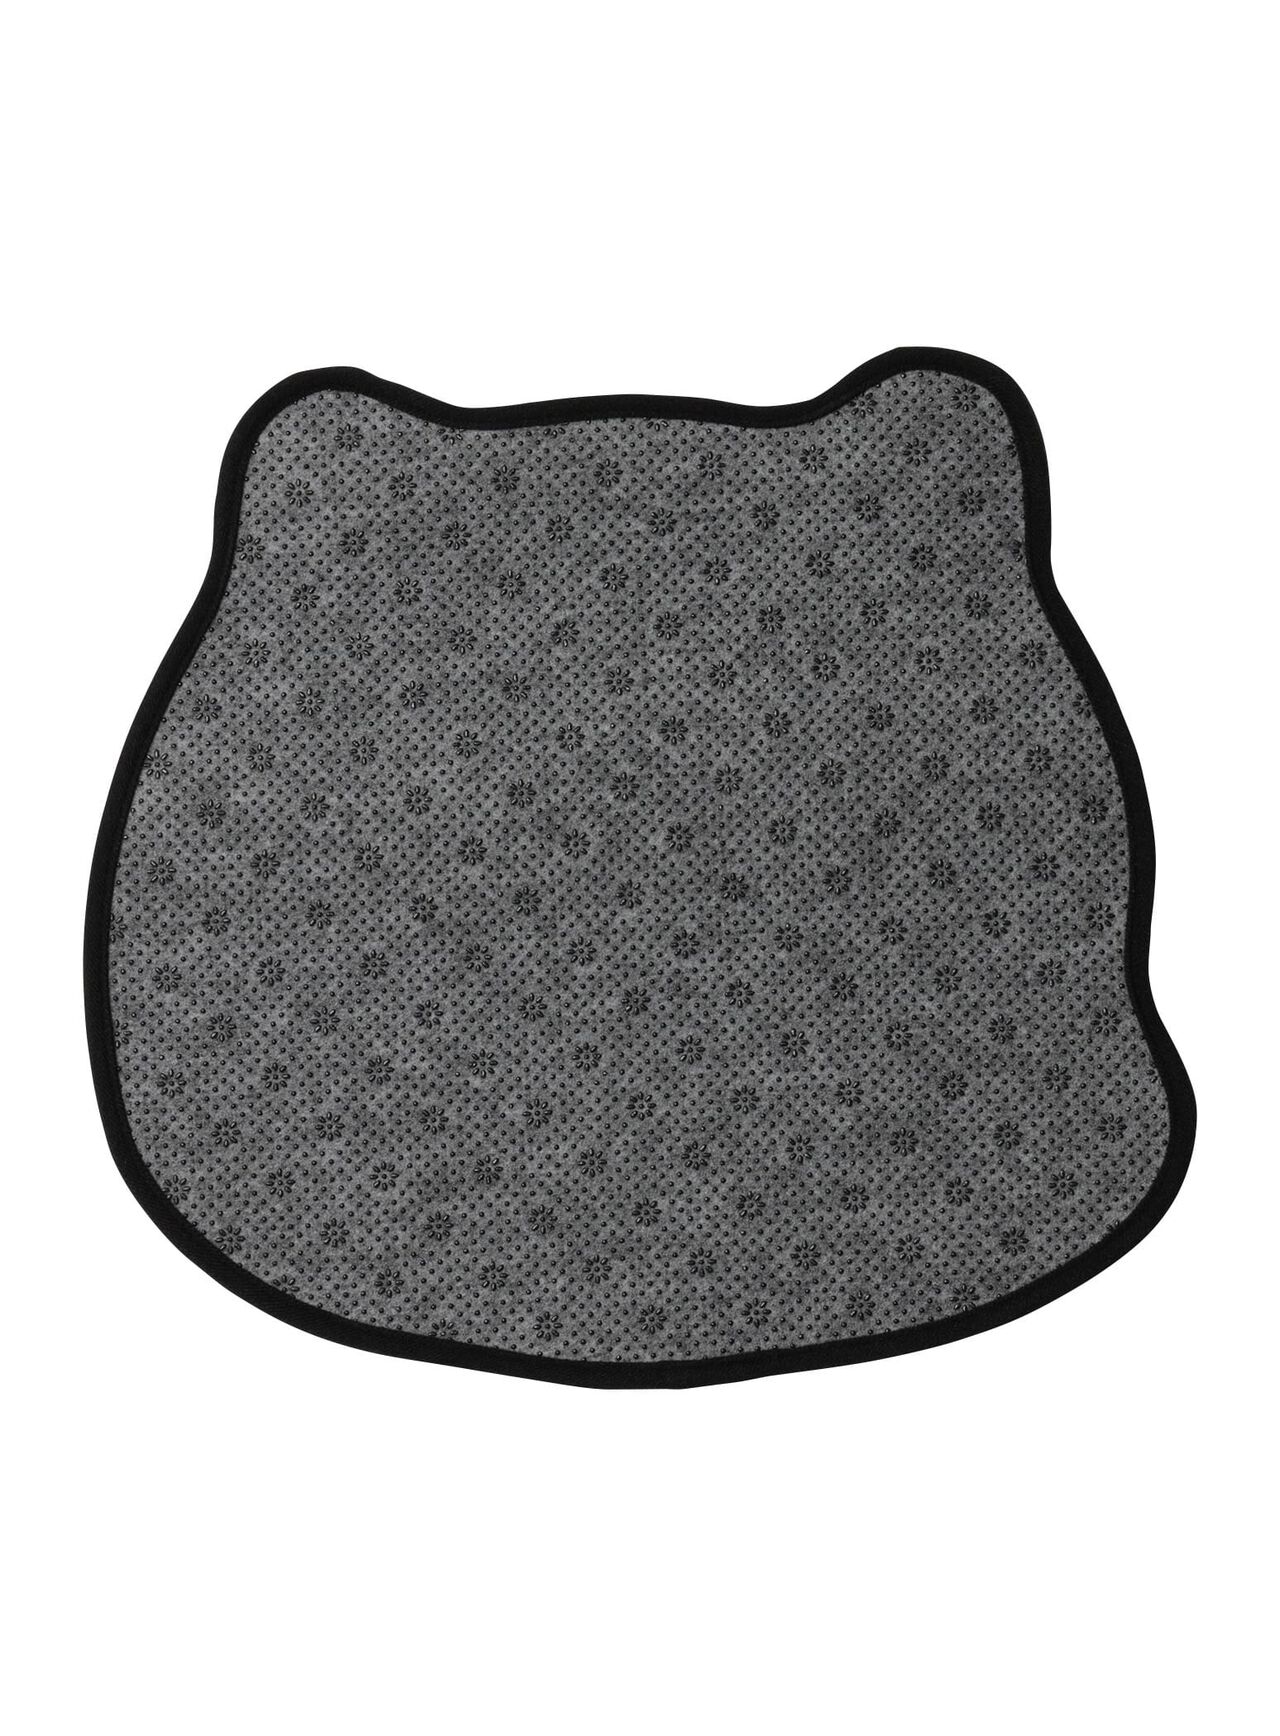 Torachan mini floor mat,ONE, large image number 1